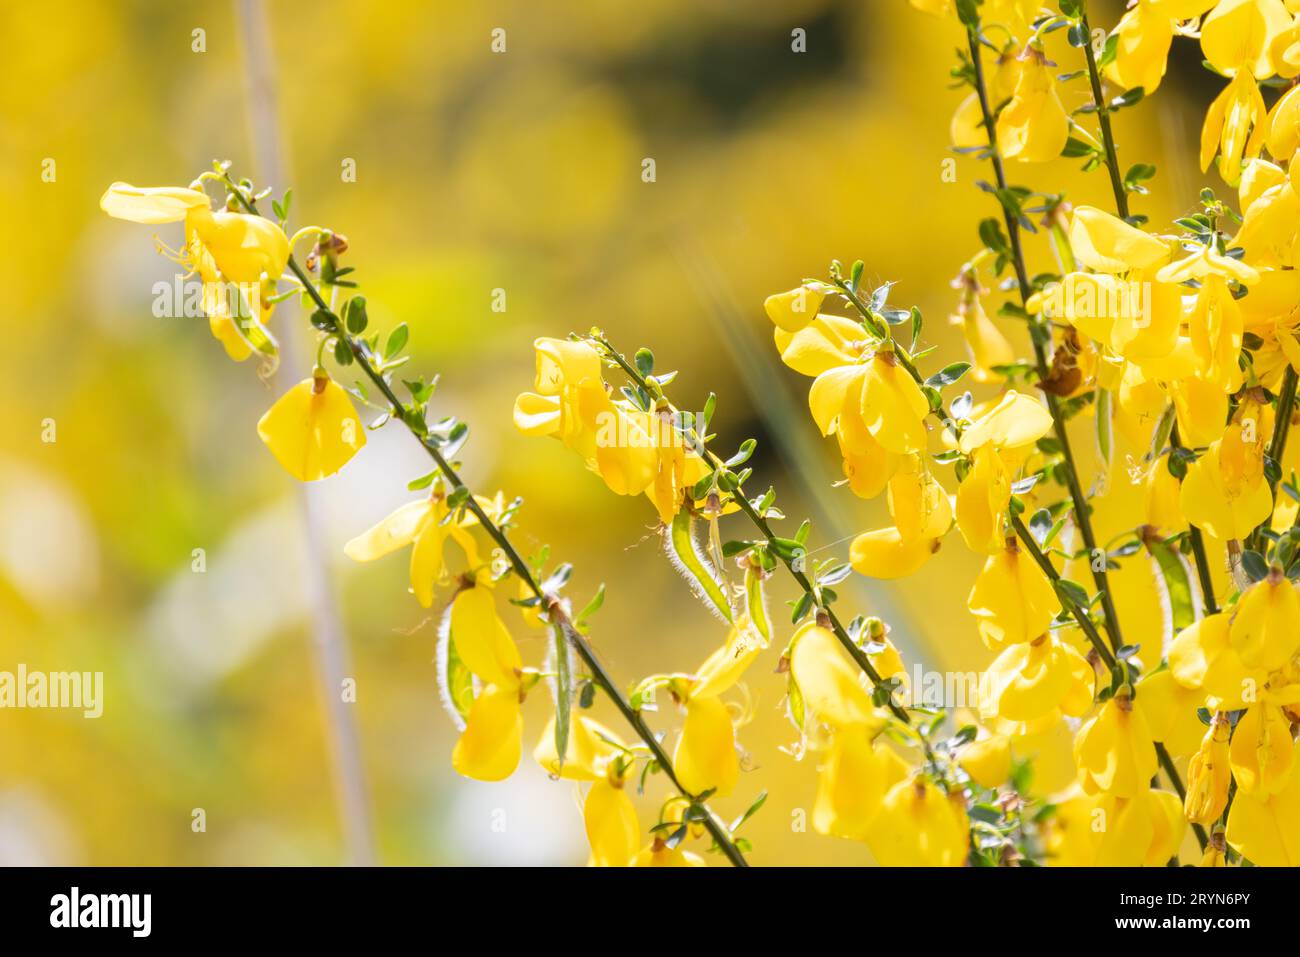 Close up yellow flowers of Cytisus scoparius, syn. Sarothamnus scoparius, common broom or Scotch broom. Family Fabaceae, Spring Stock Photo